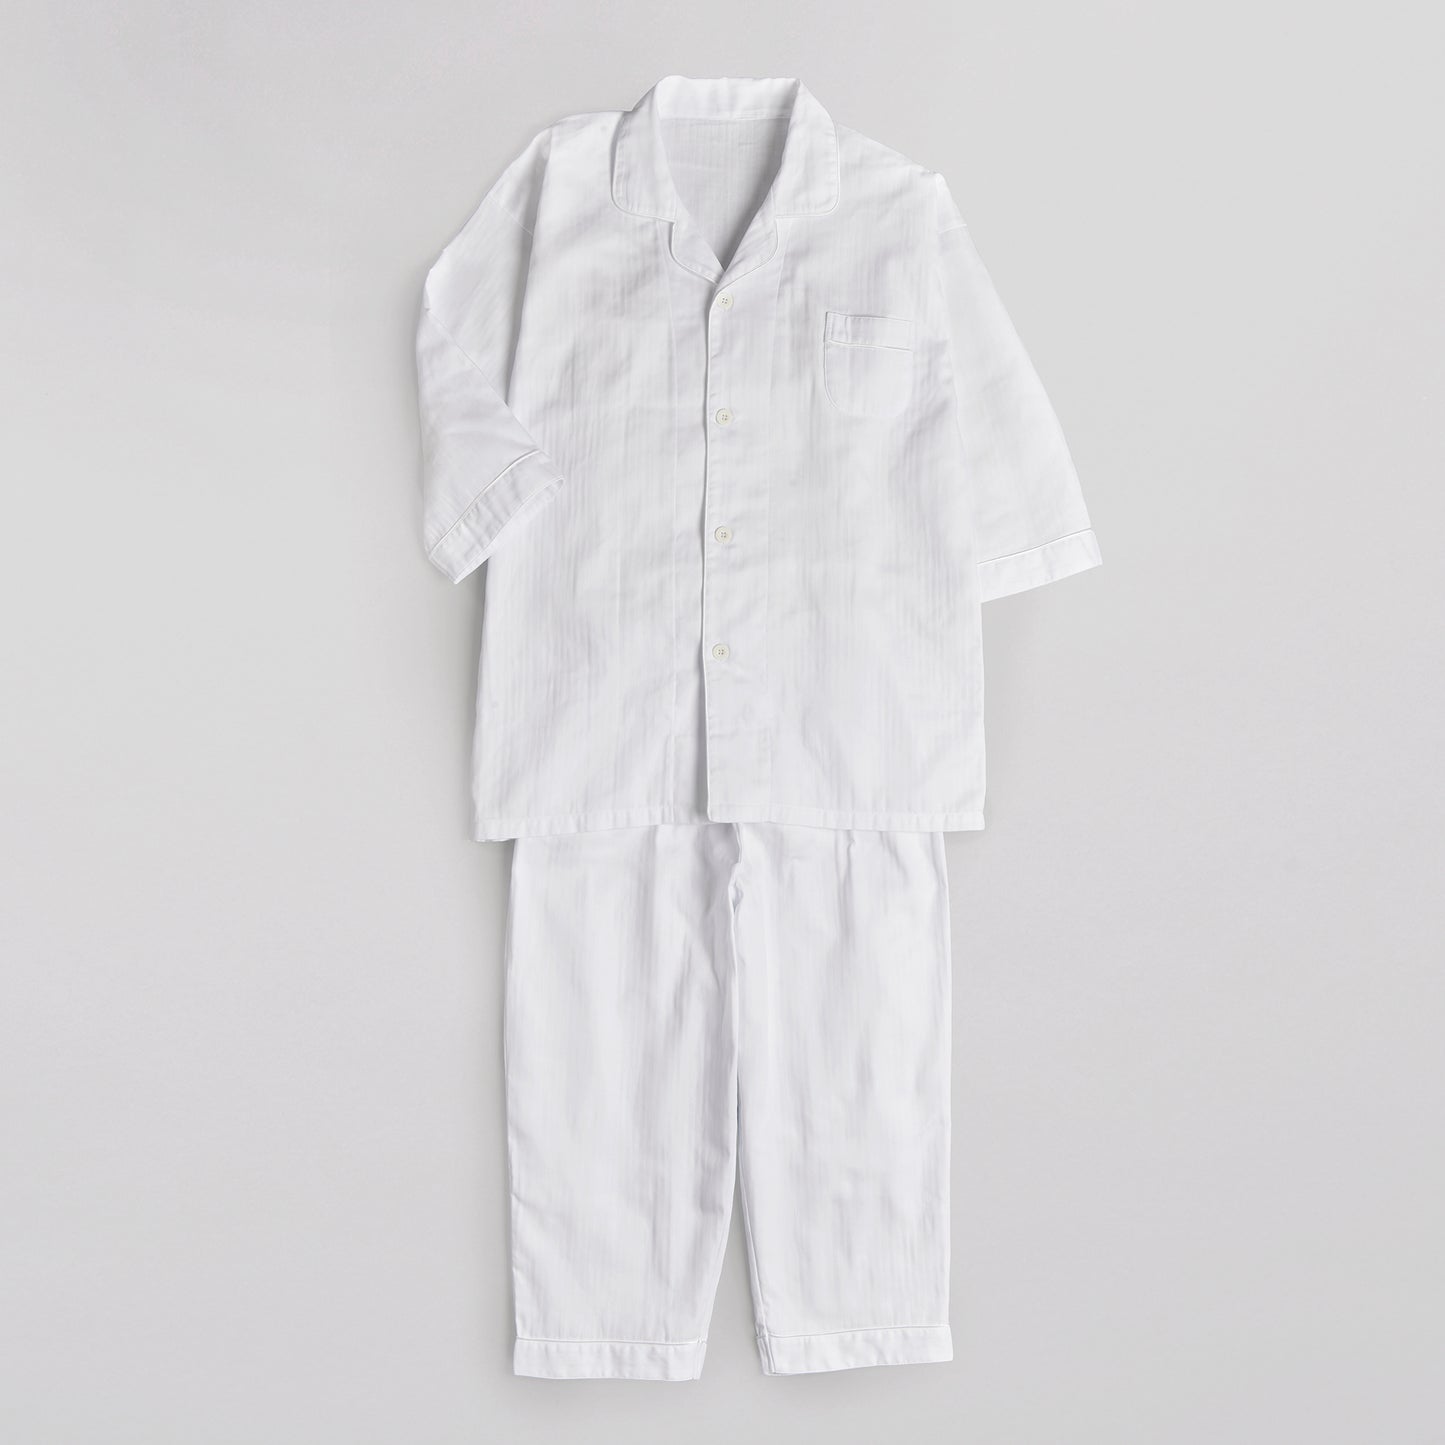 Pajamas_004〈white〉white piping